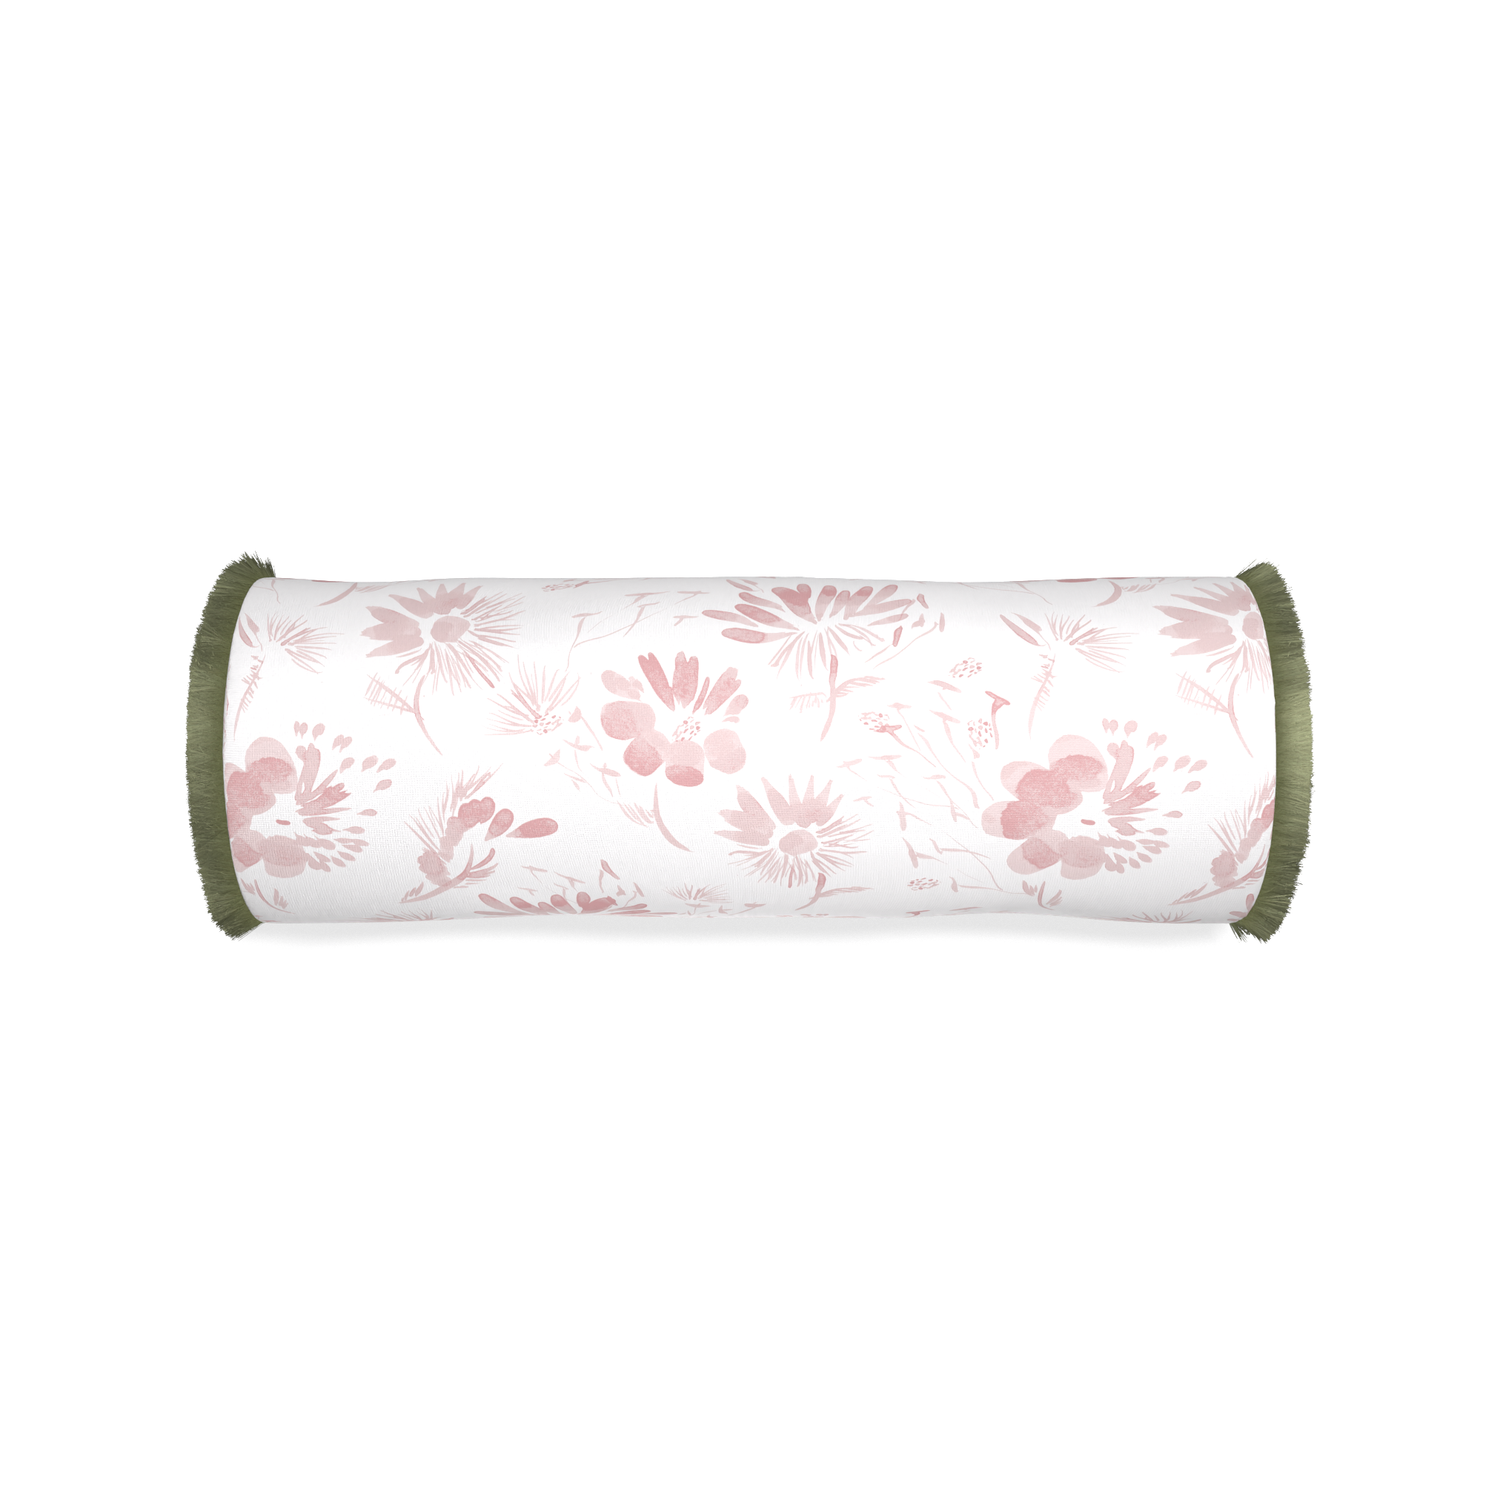 Bolster blake custom pink floralpillow with sage fringe on white background